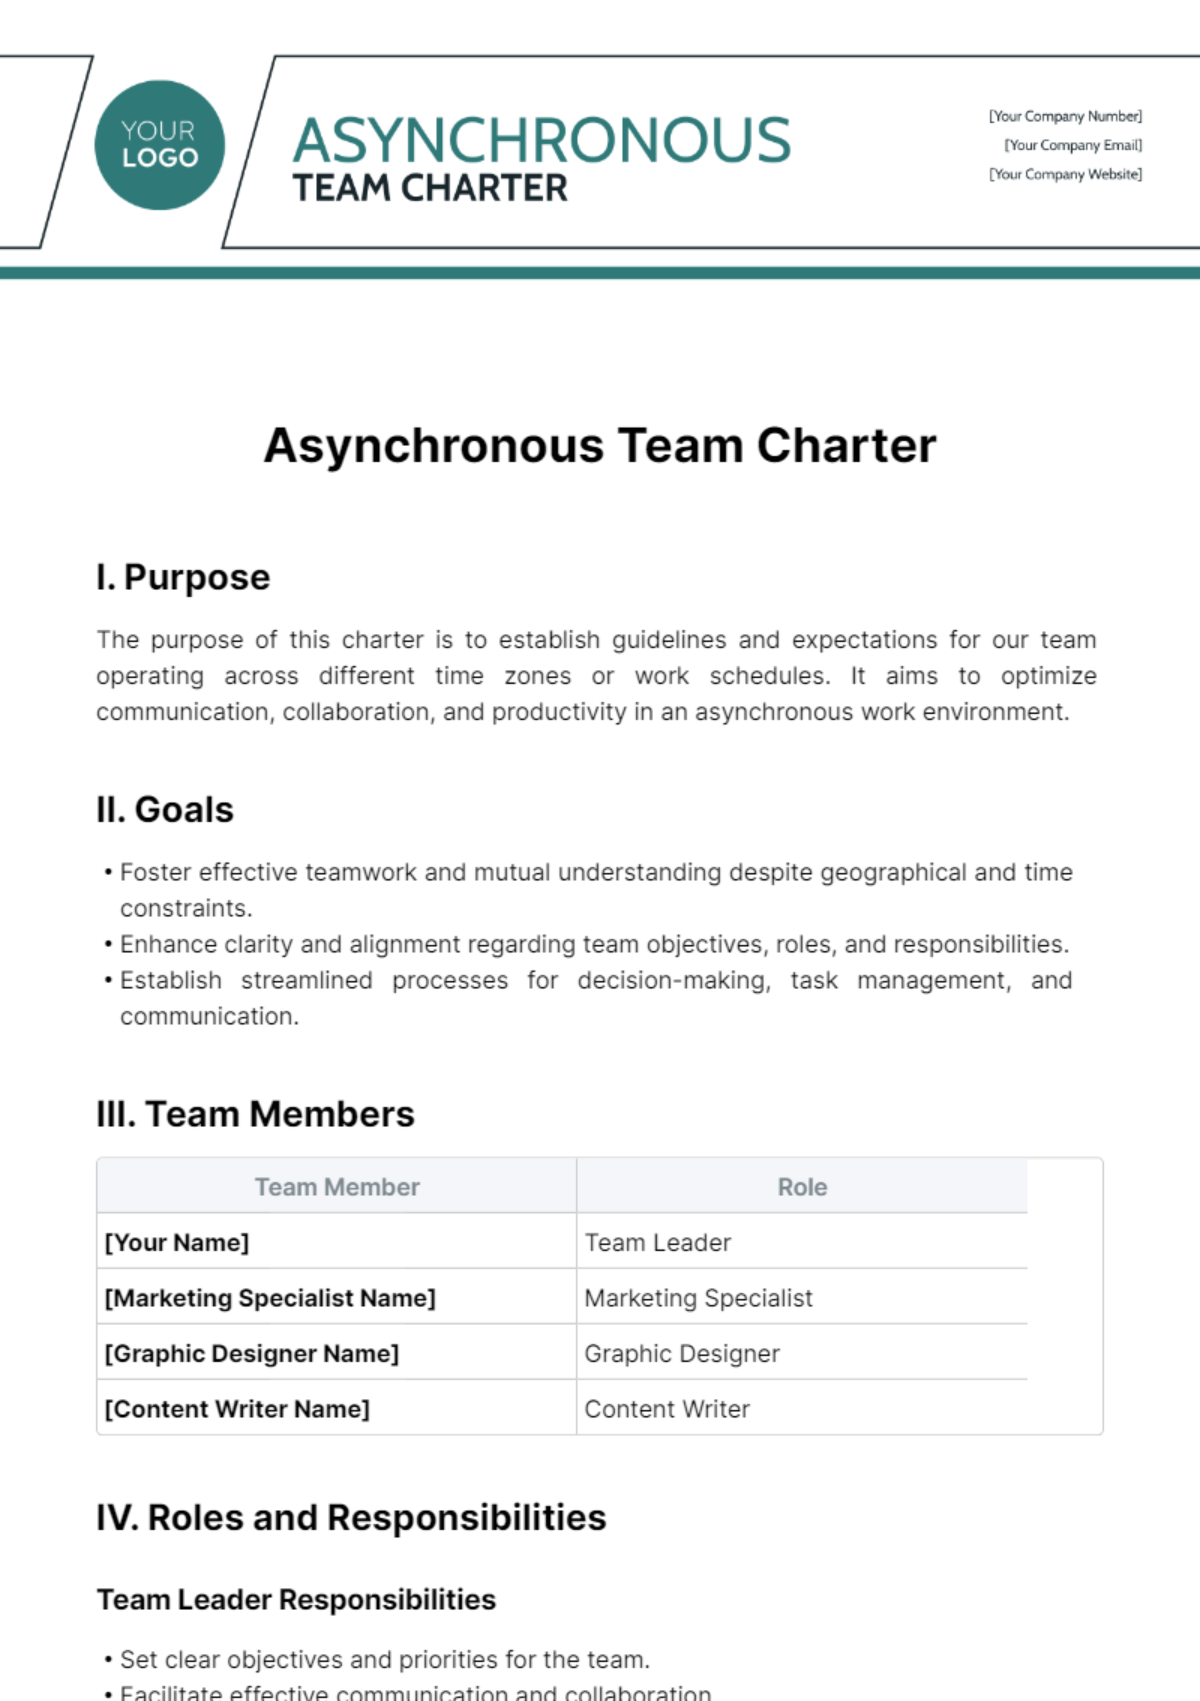 Asynchronous Team Charter Template